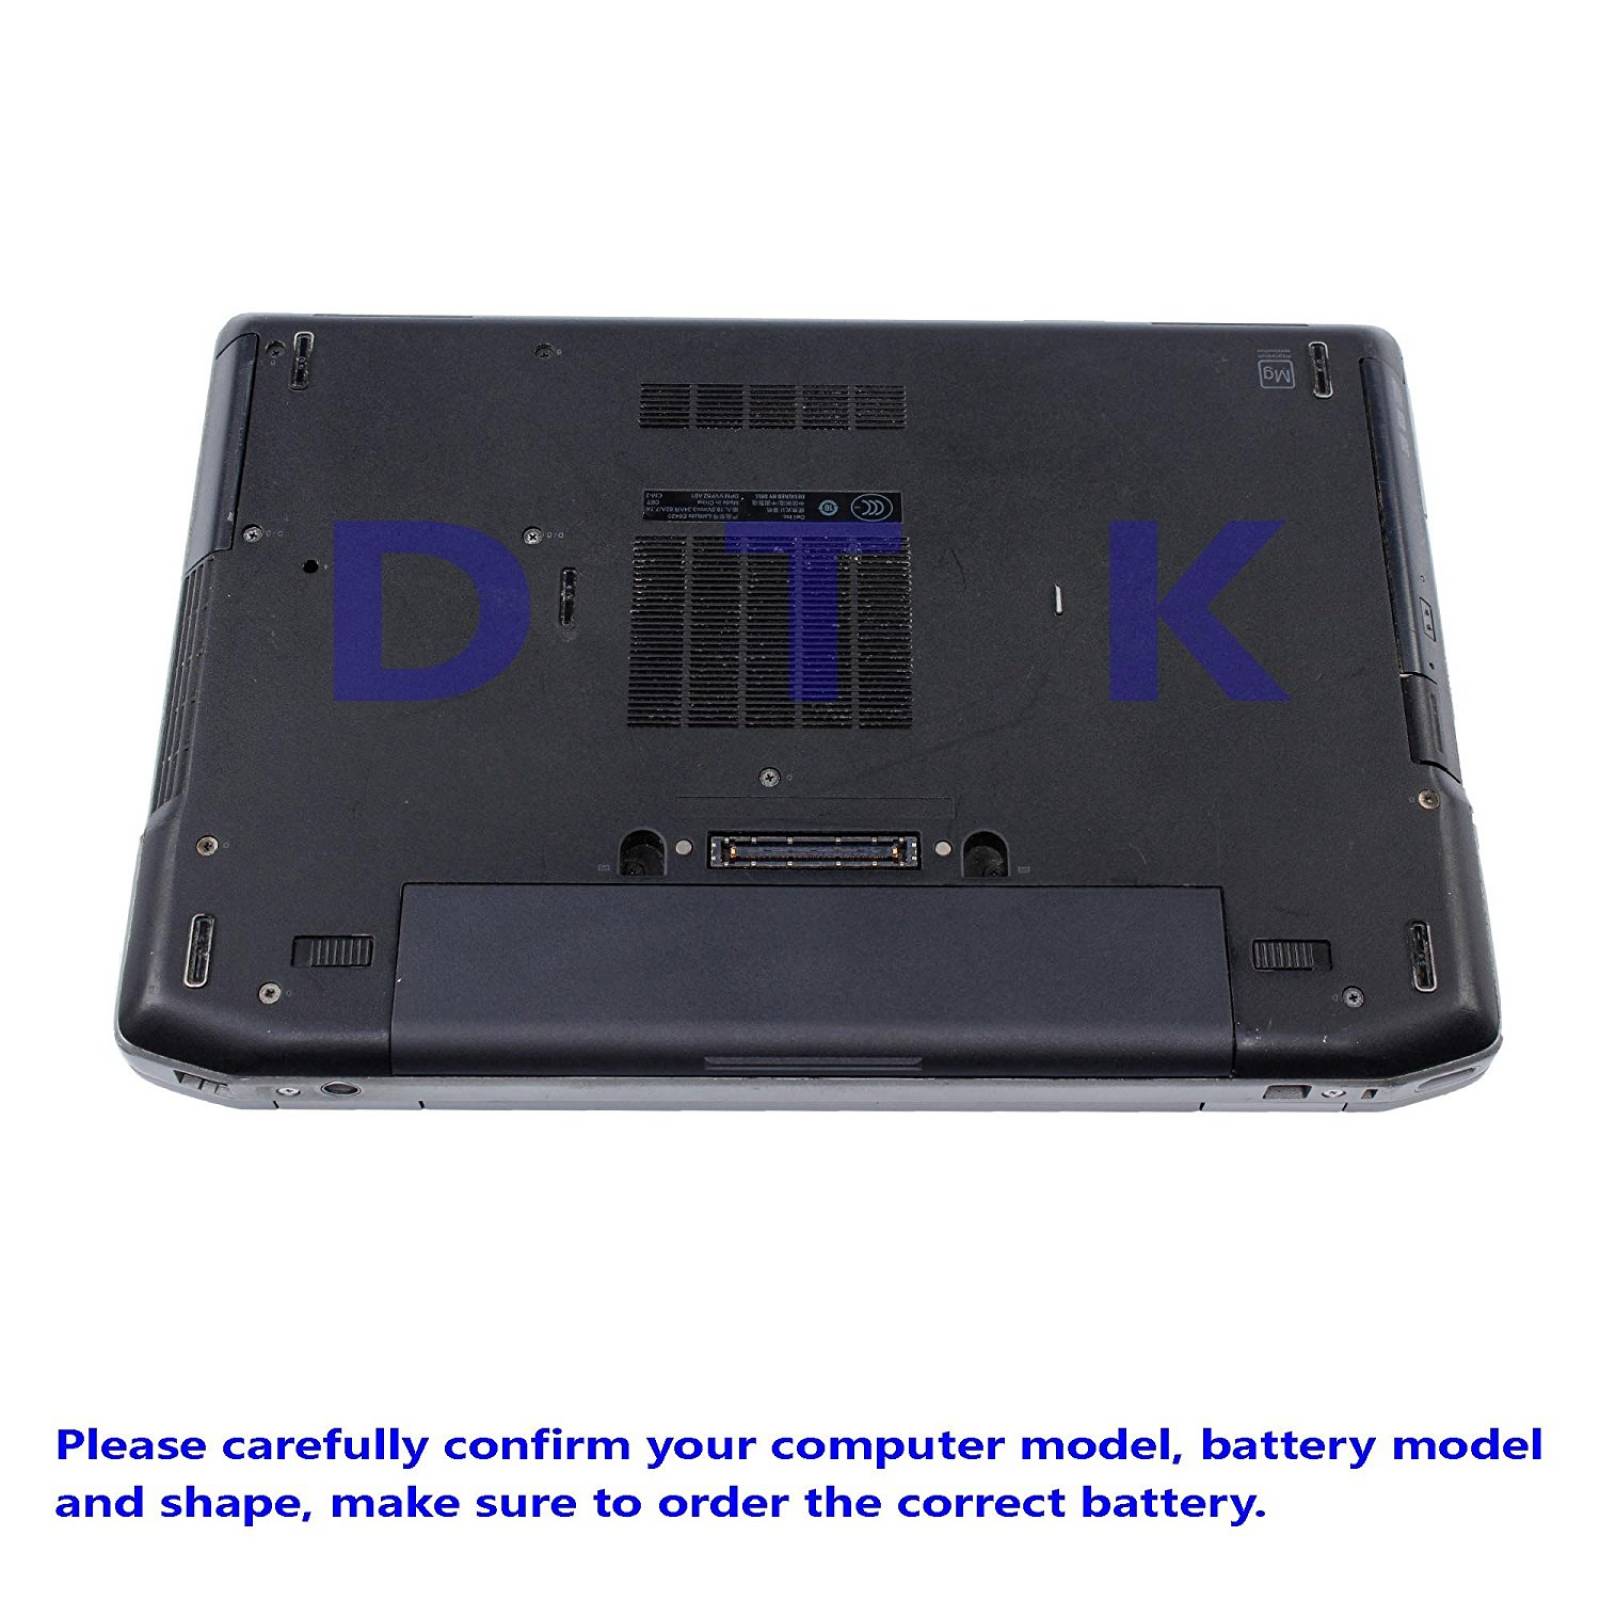 DTK batería Dell E5420 E5430 E5530 E6420 E6430 E6520 E6530 I